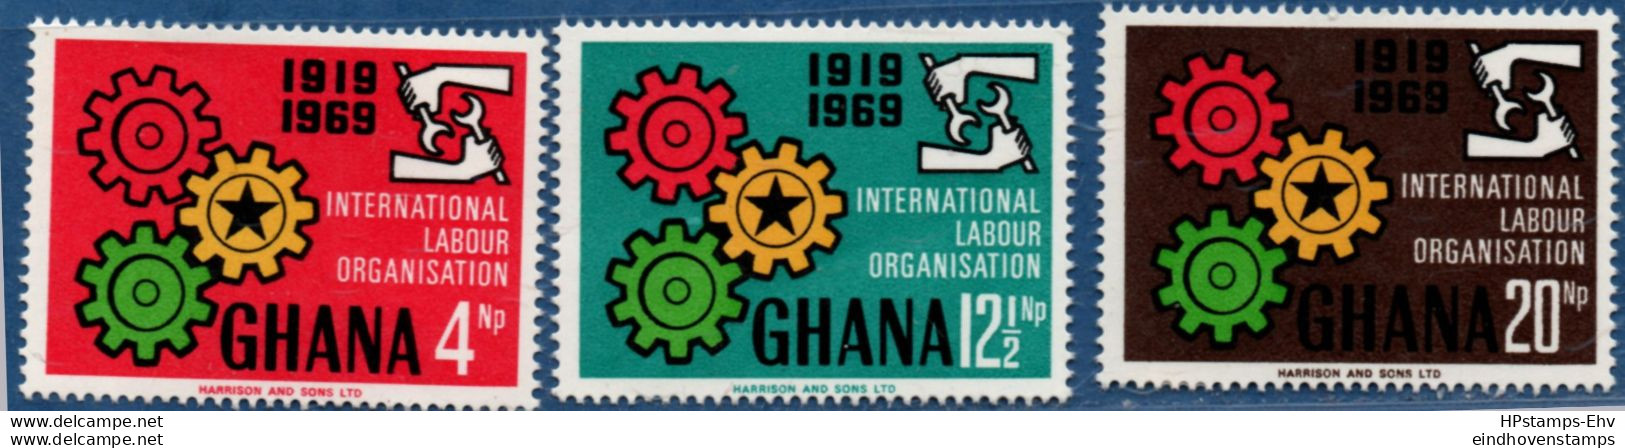 Ghana 1969, ILO Labor Organisation 3 Stamps MNH 2105.2426 OIT - ILO